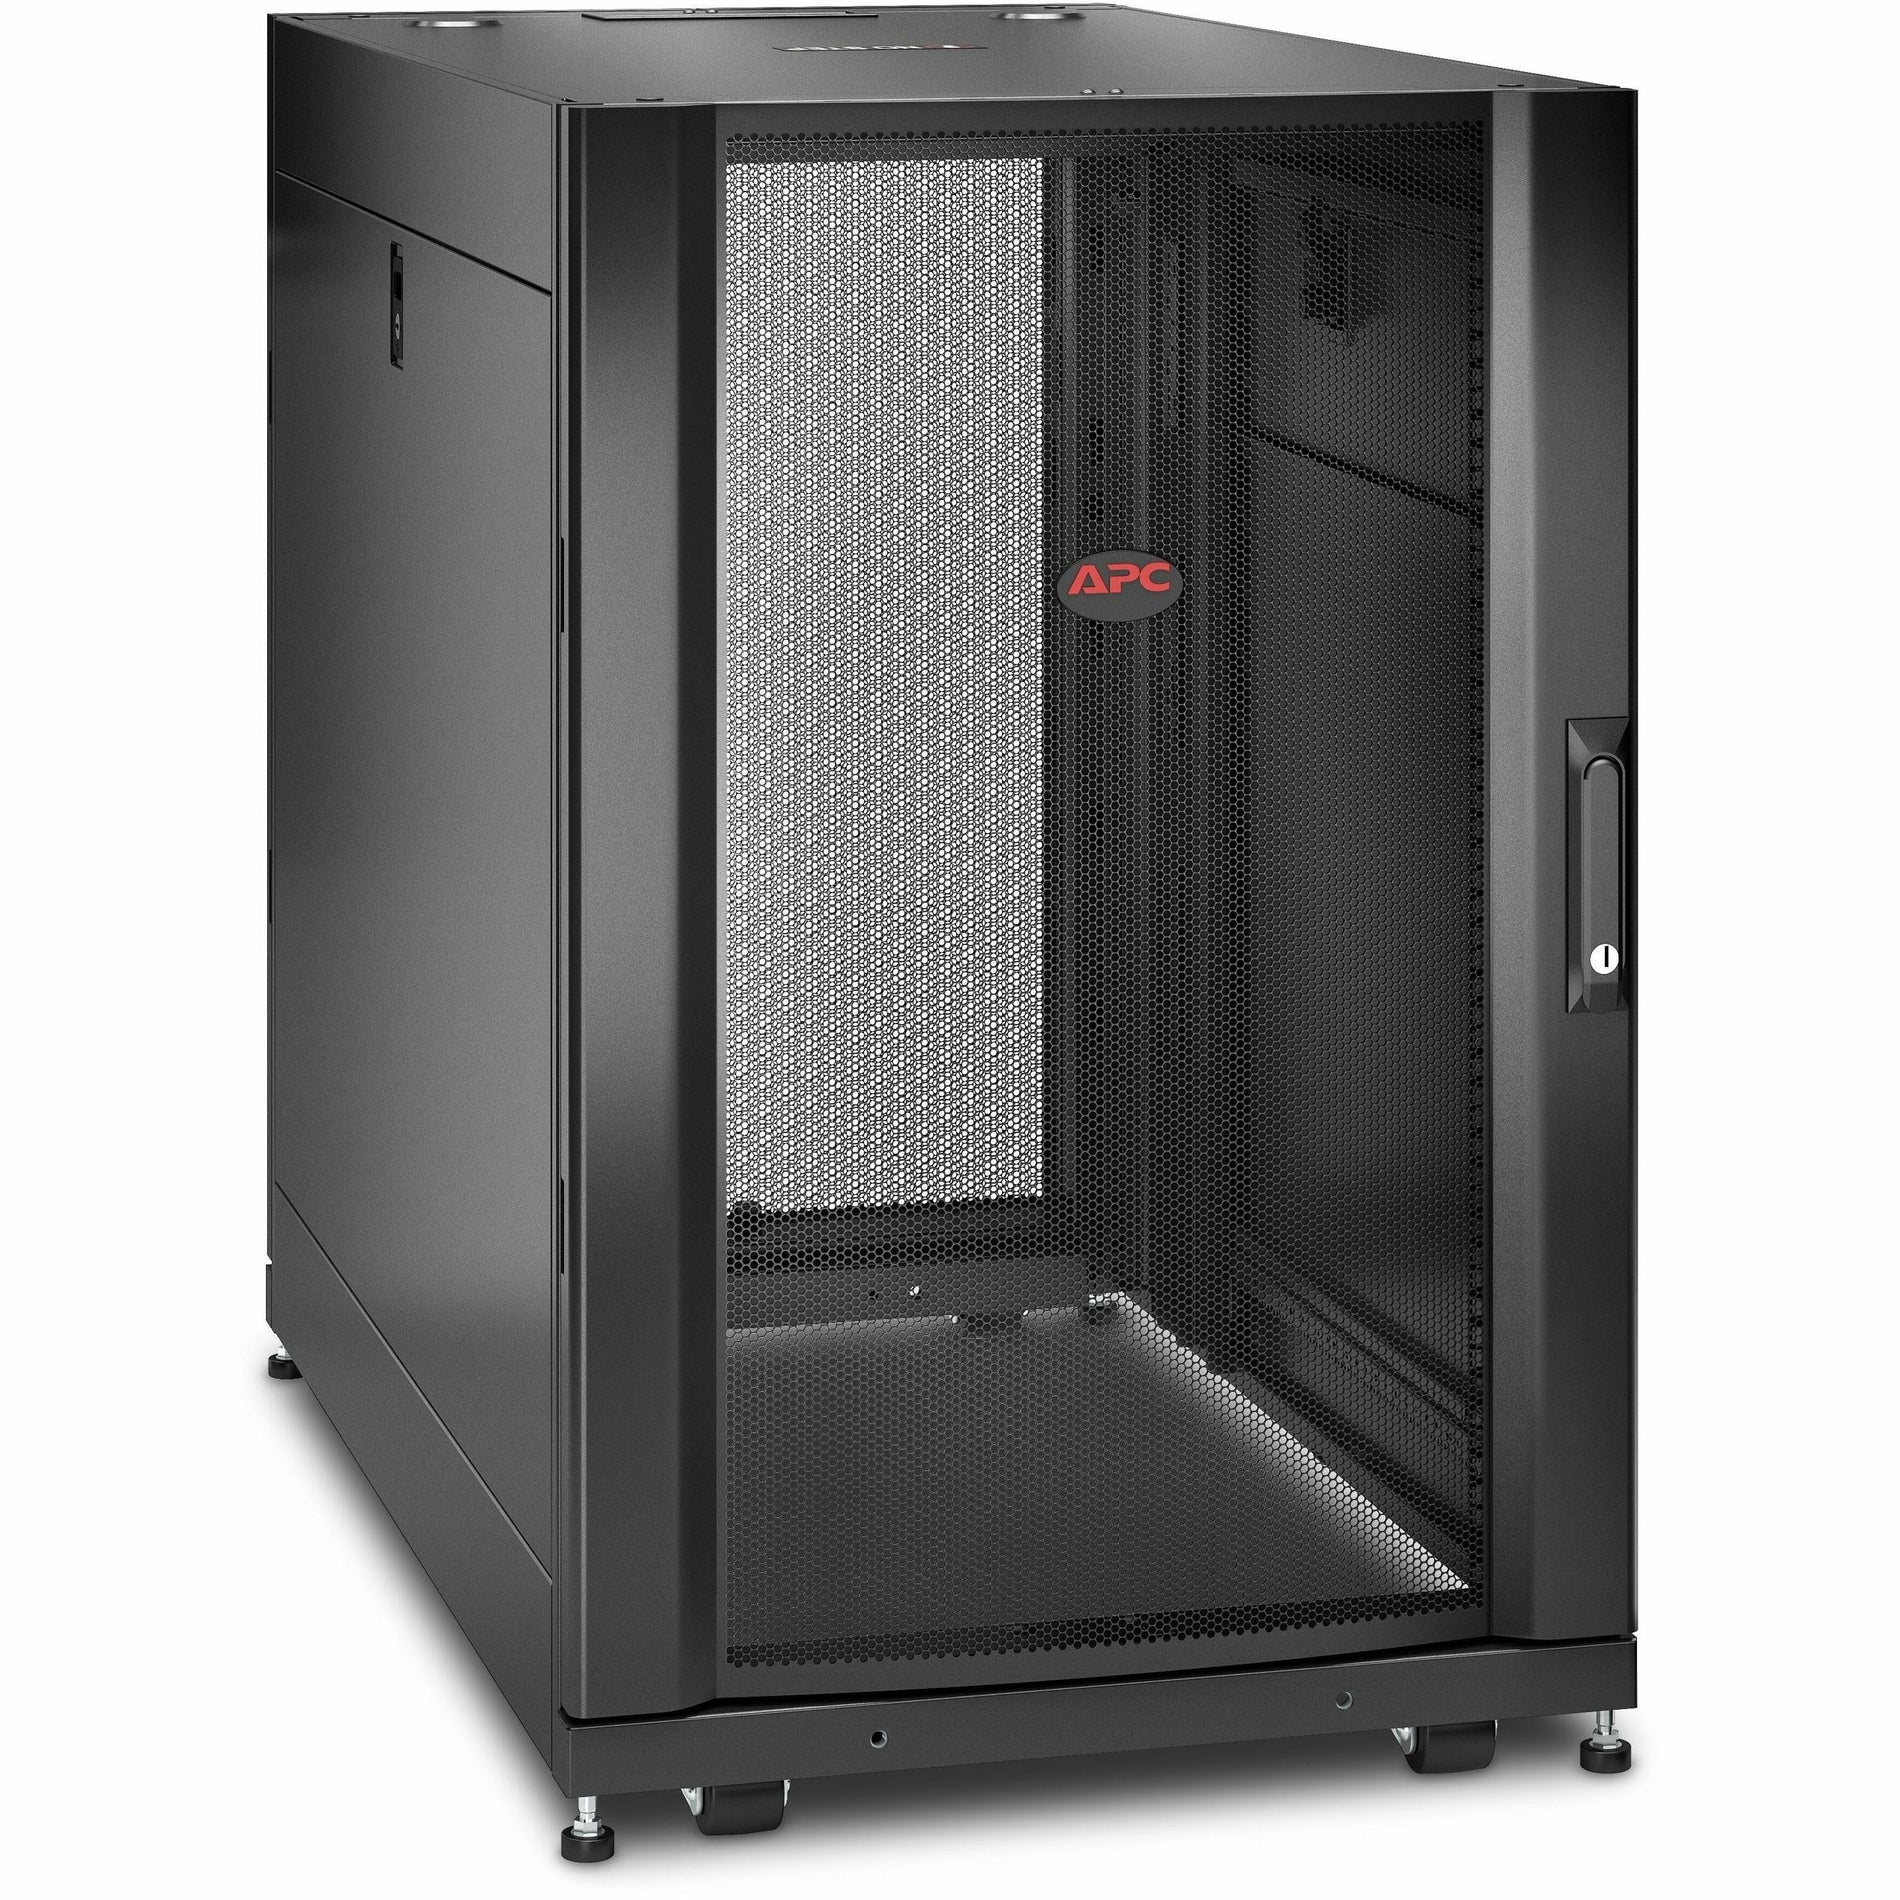 APC AR3106 NetShelter SX 18U Server Rack Enclosure, Black - 600mm x 1070mm, 5 Year Warranty